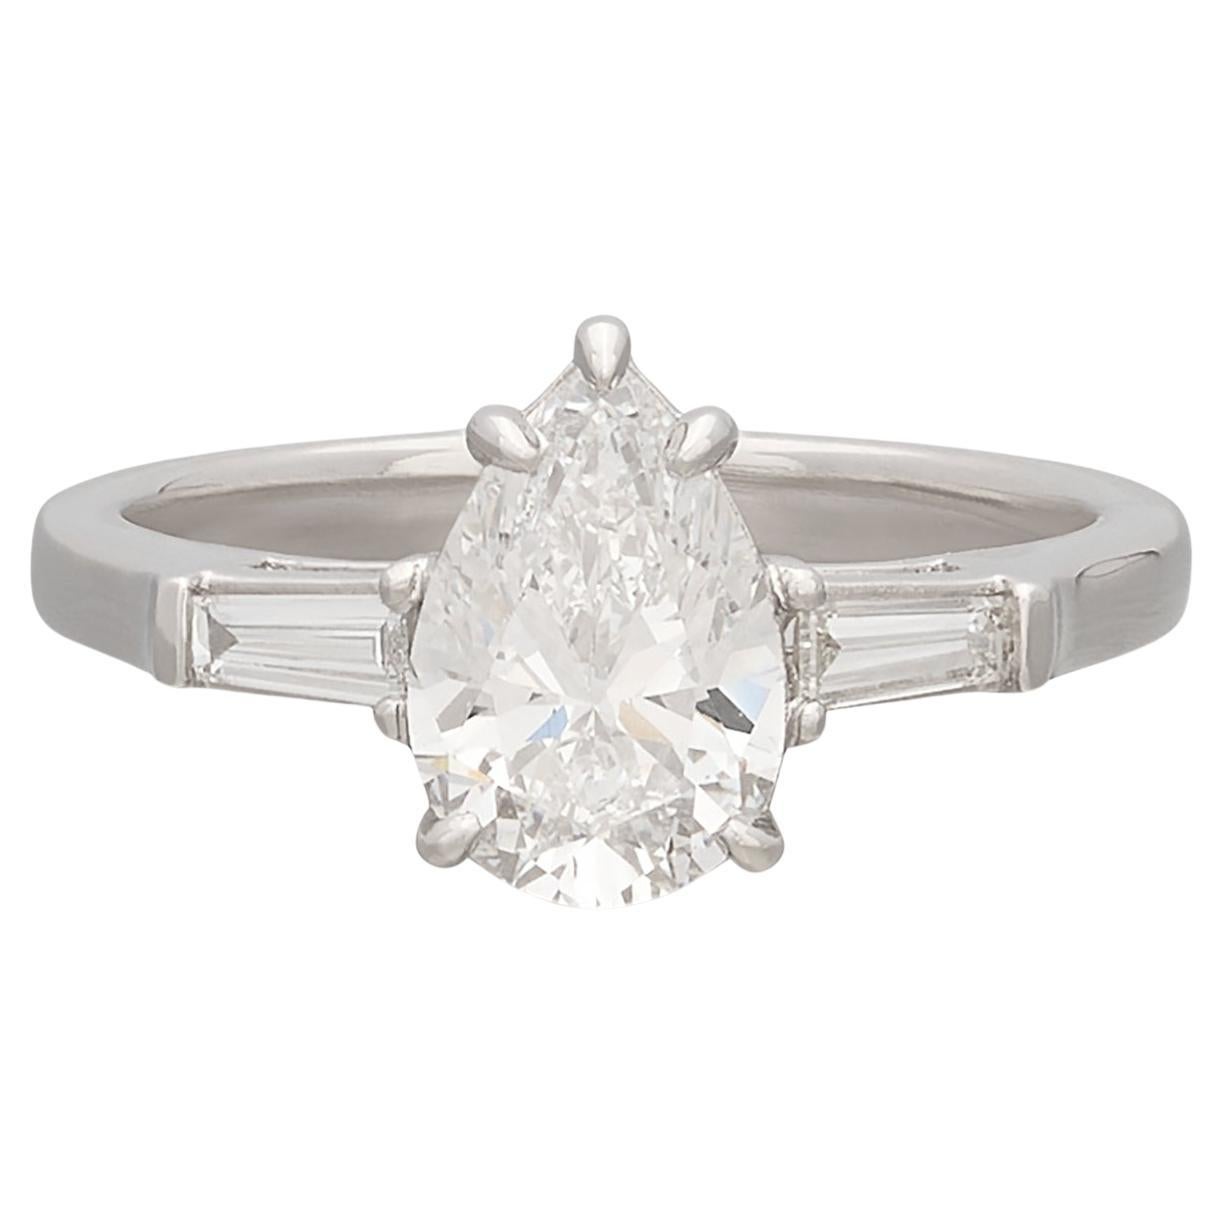 Incredible Platinum 1.50ct GIA D/Internally Flawless Pear Diamond Ring